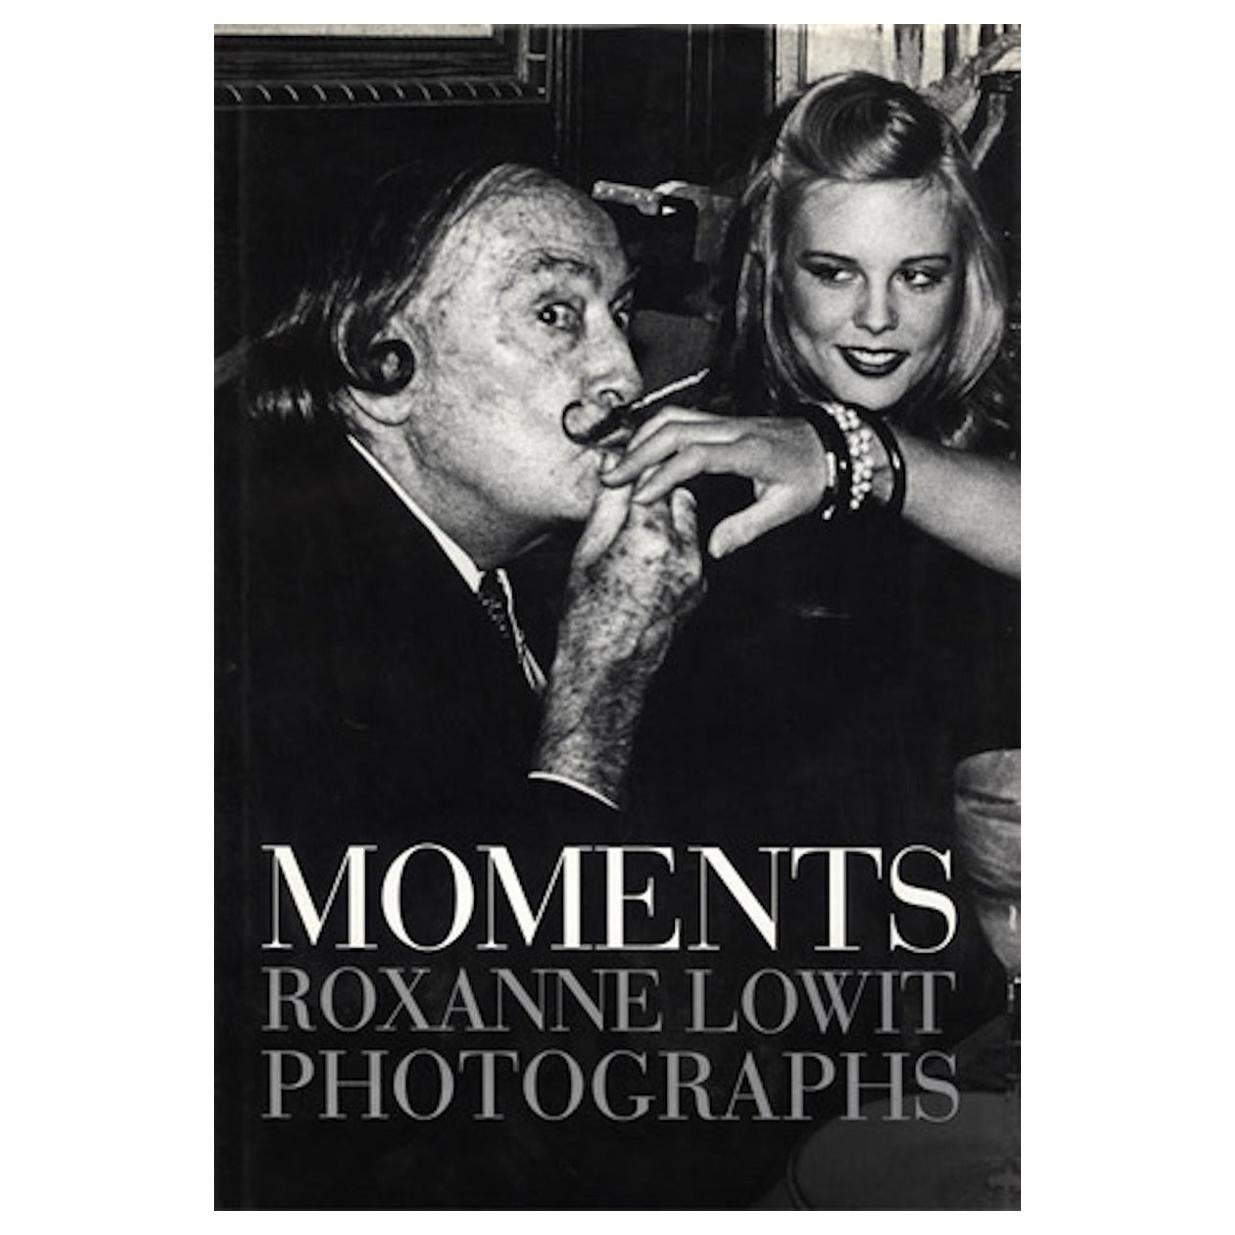 Moments, Roxanne Lowit Photographs, 1992